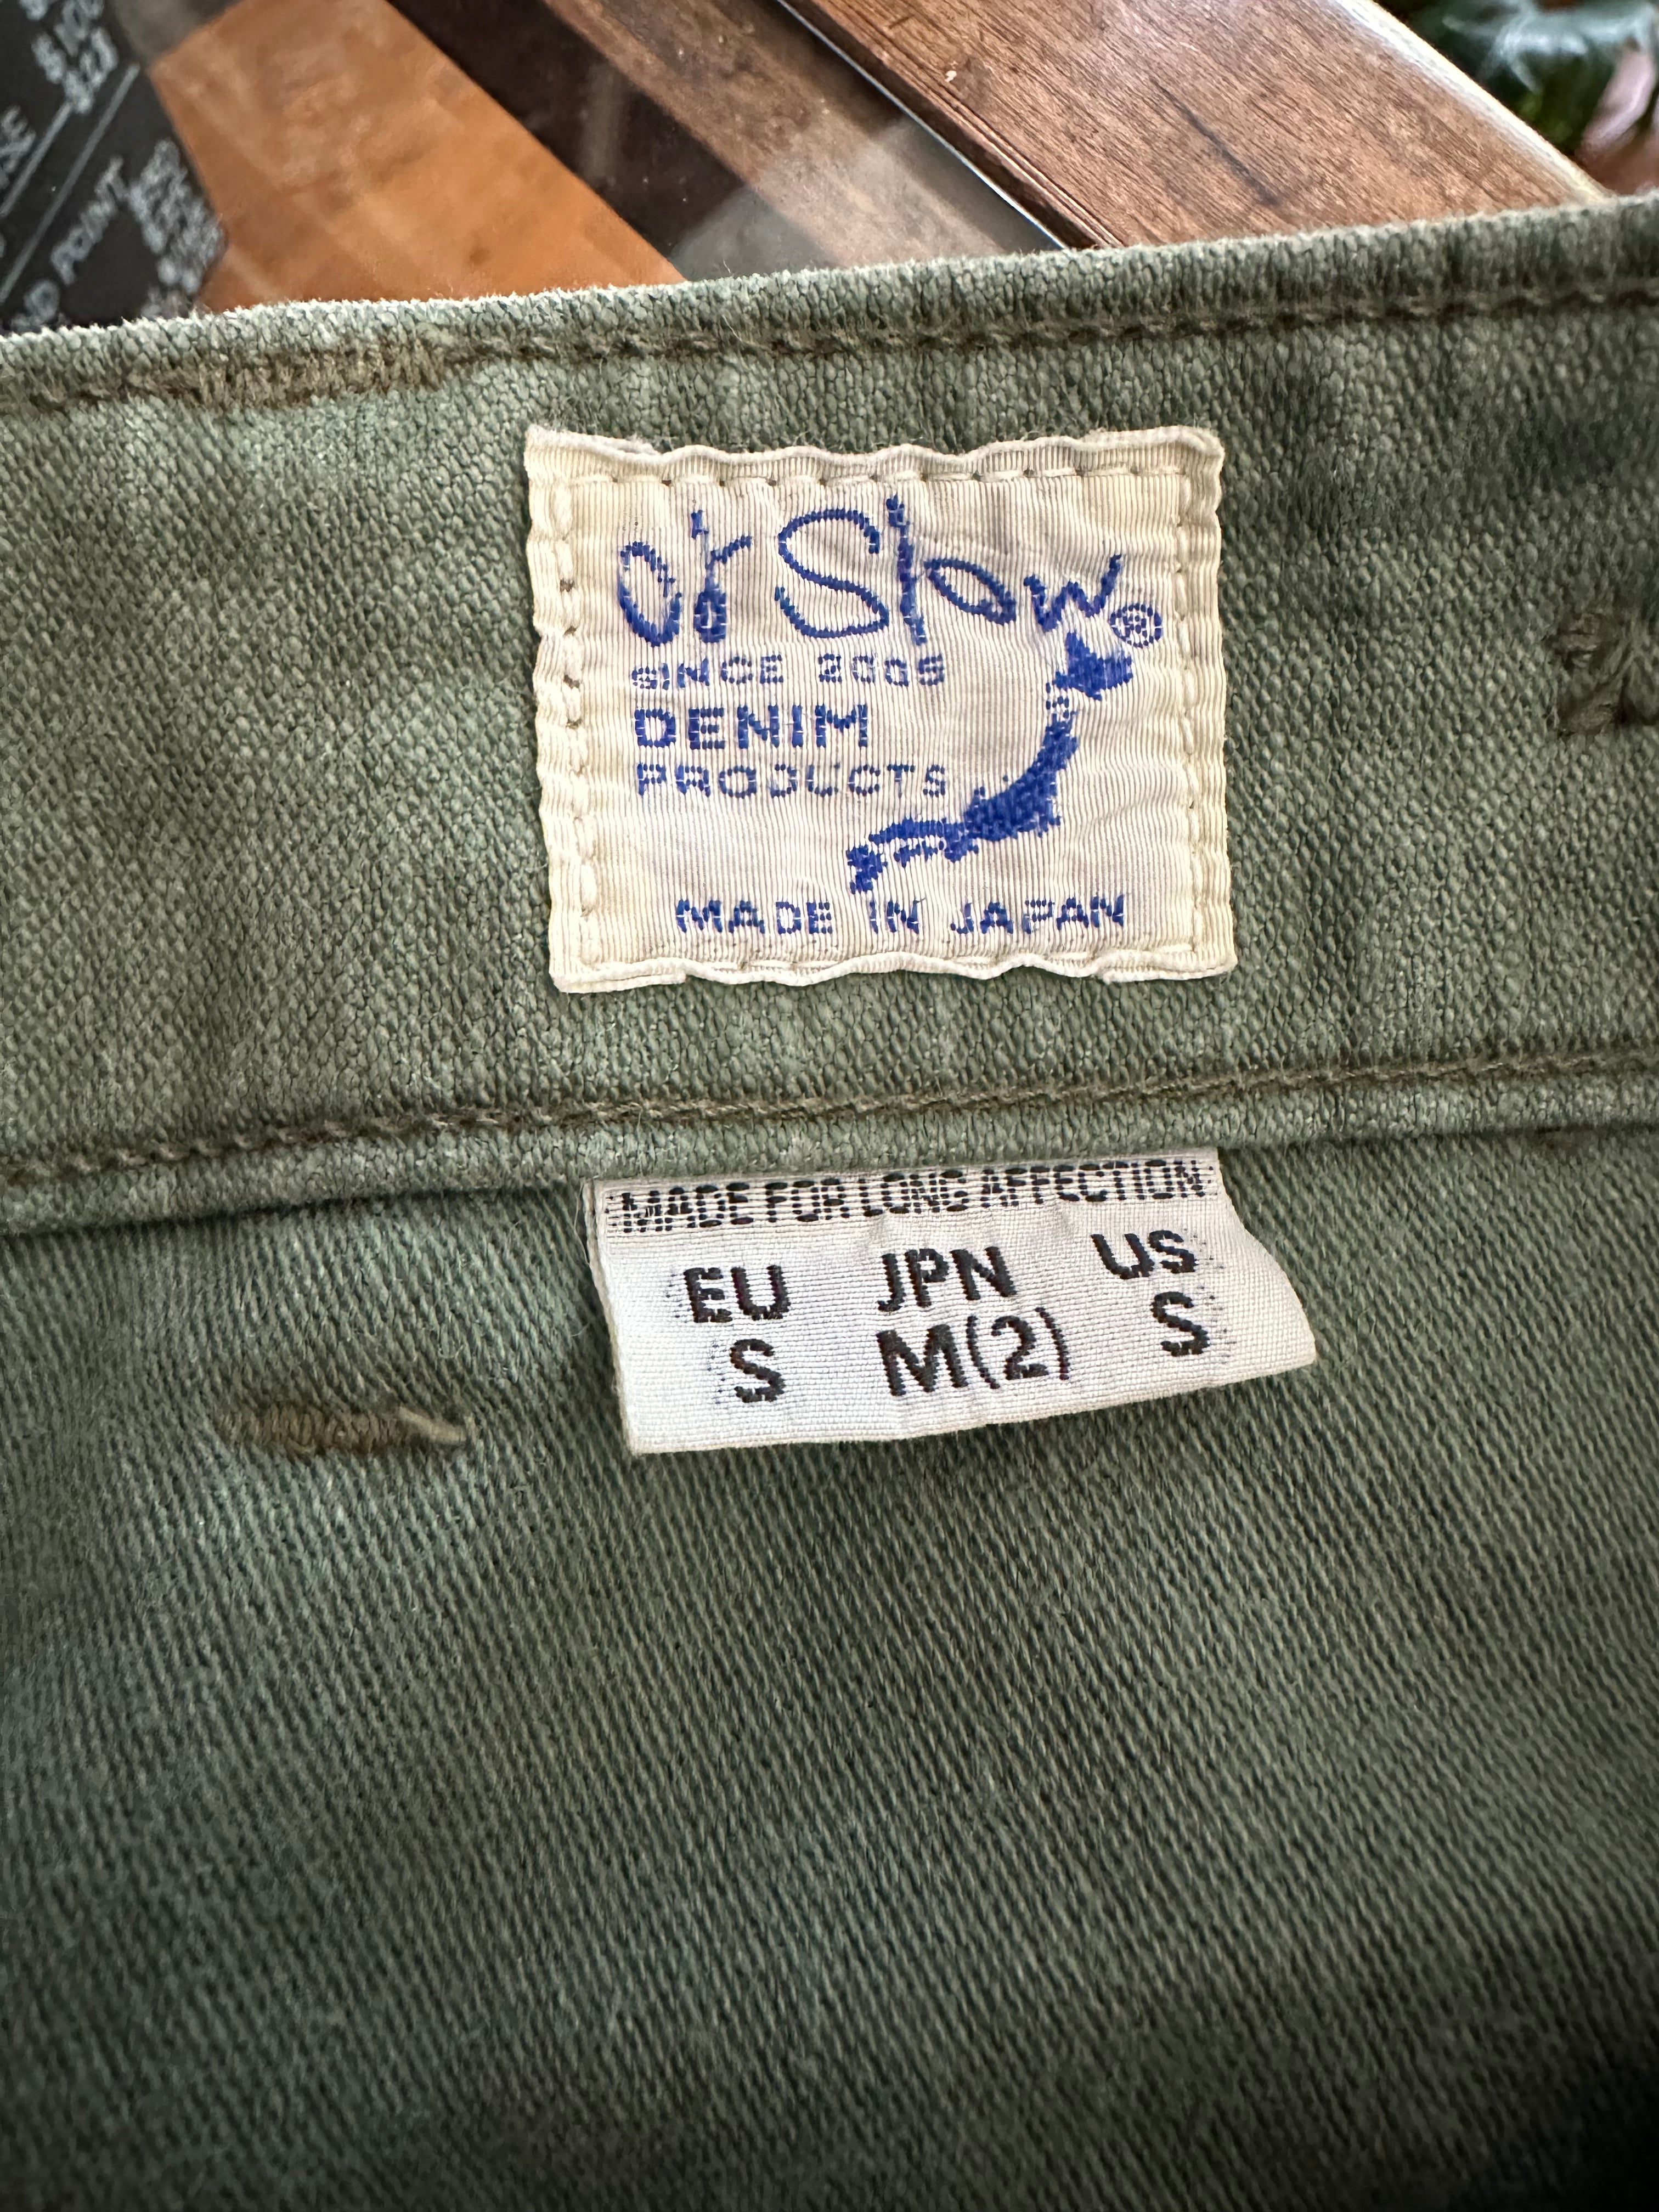 Gently Used orSlow Fatigue Pants - Standard Fit - Vintage Washed Olive - 2